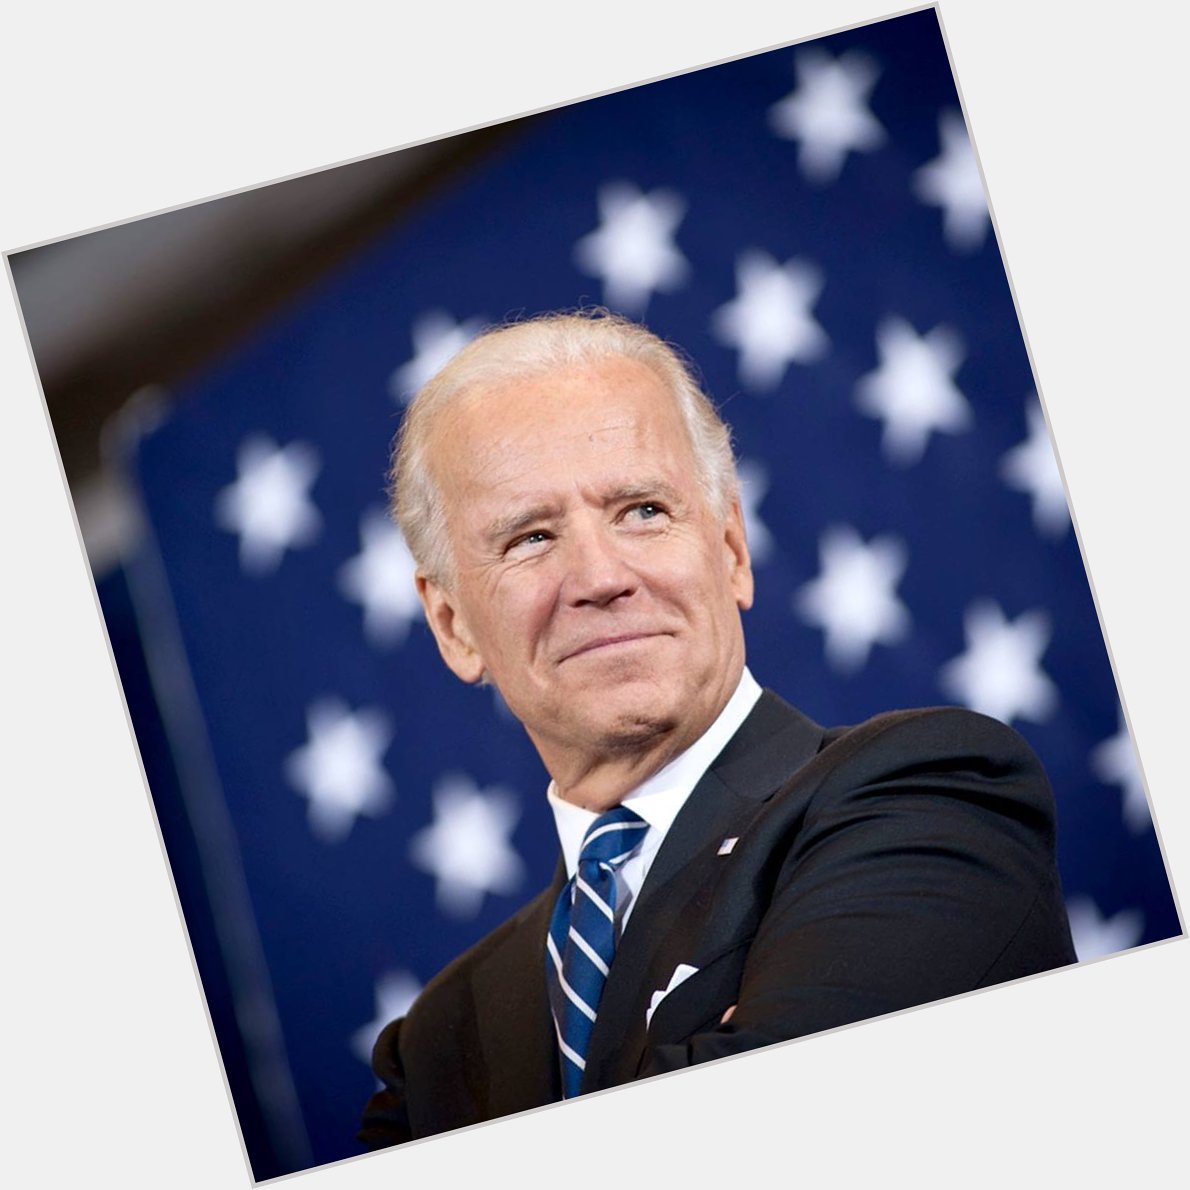 Happy birthday, Joe Biden! 